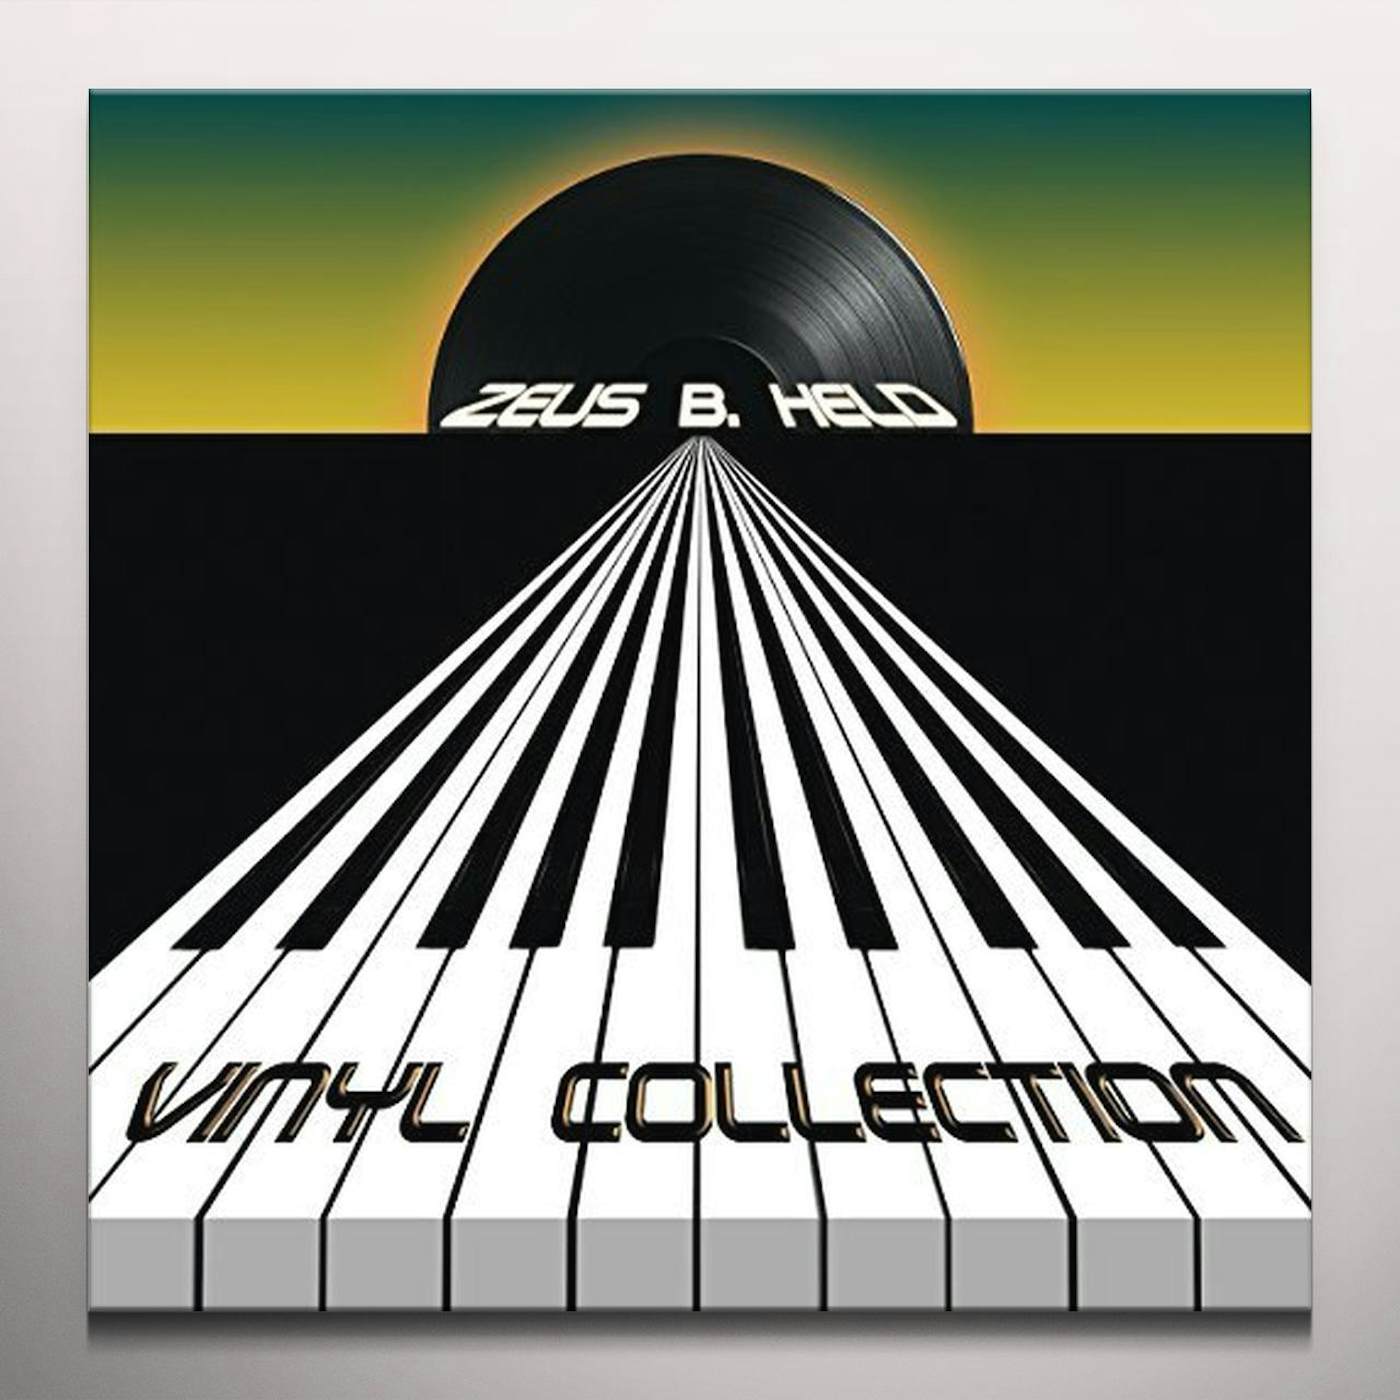 Zeus B. Held VINYL COLLECTION Vinyl Record